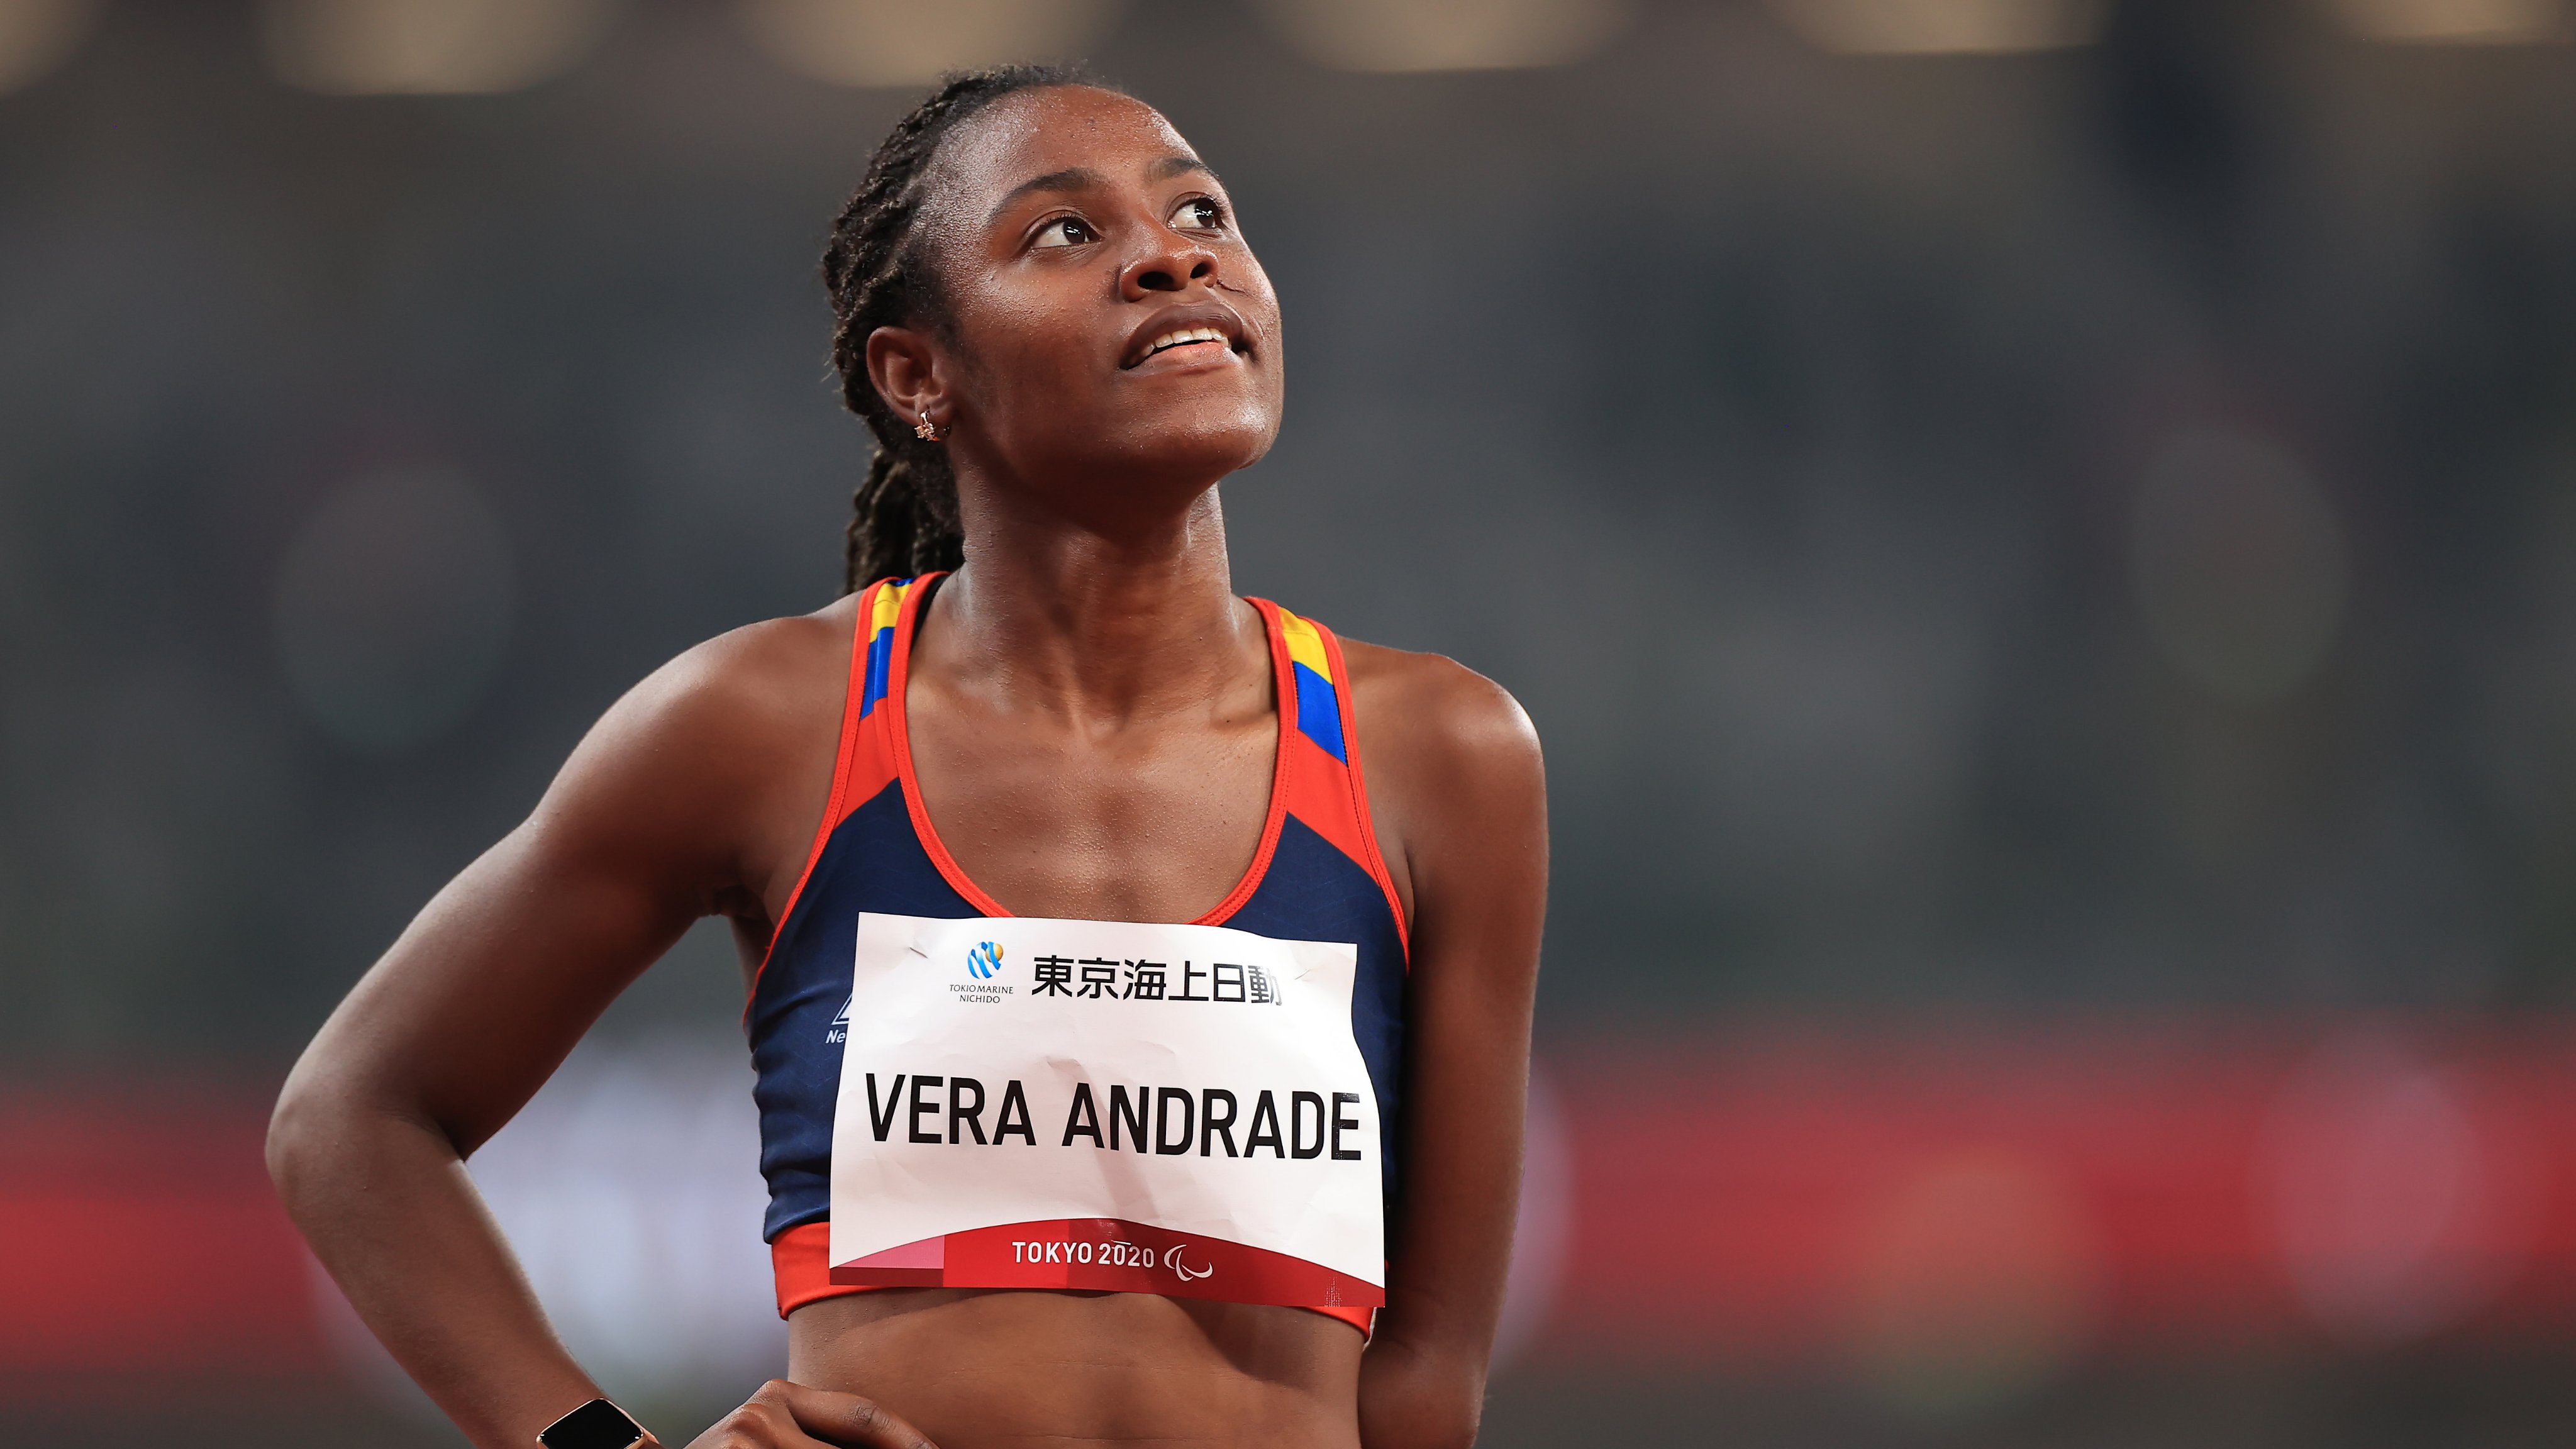 ¡Orgullo venezolano! Lisbeli Vera repite oro en los 200 metros del atletismo paralímpico (VIDEO)